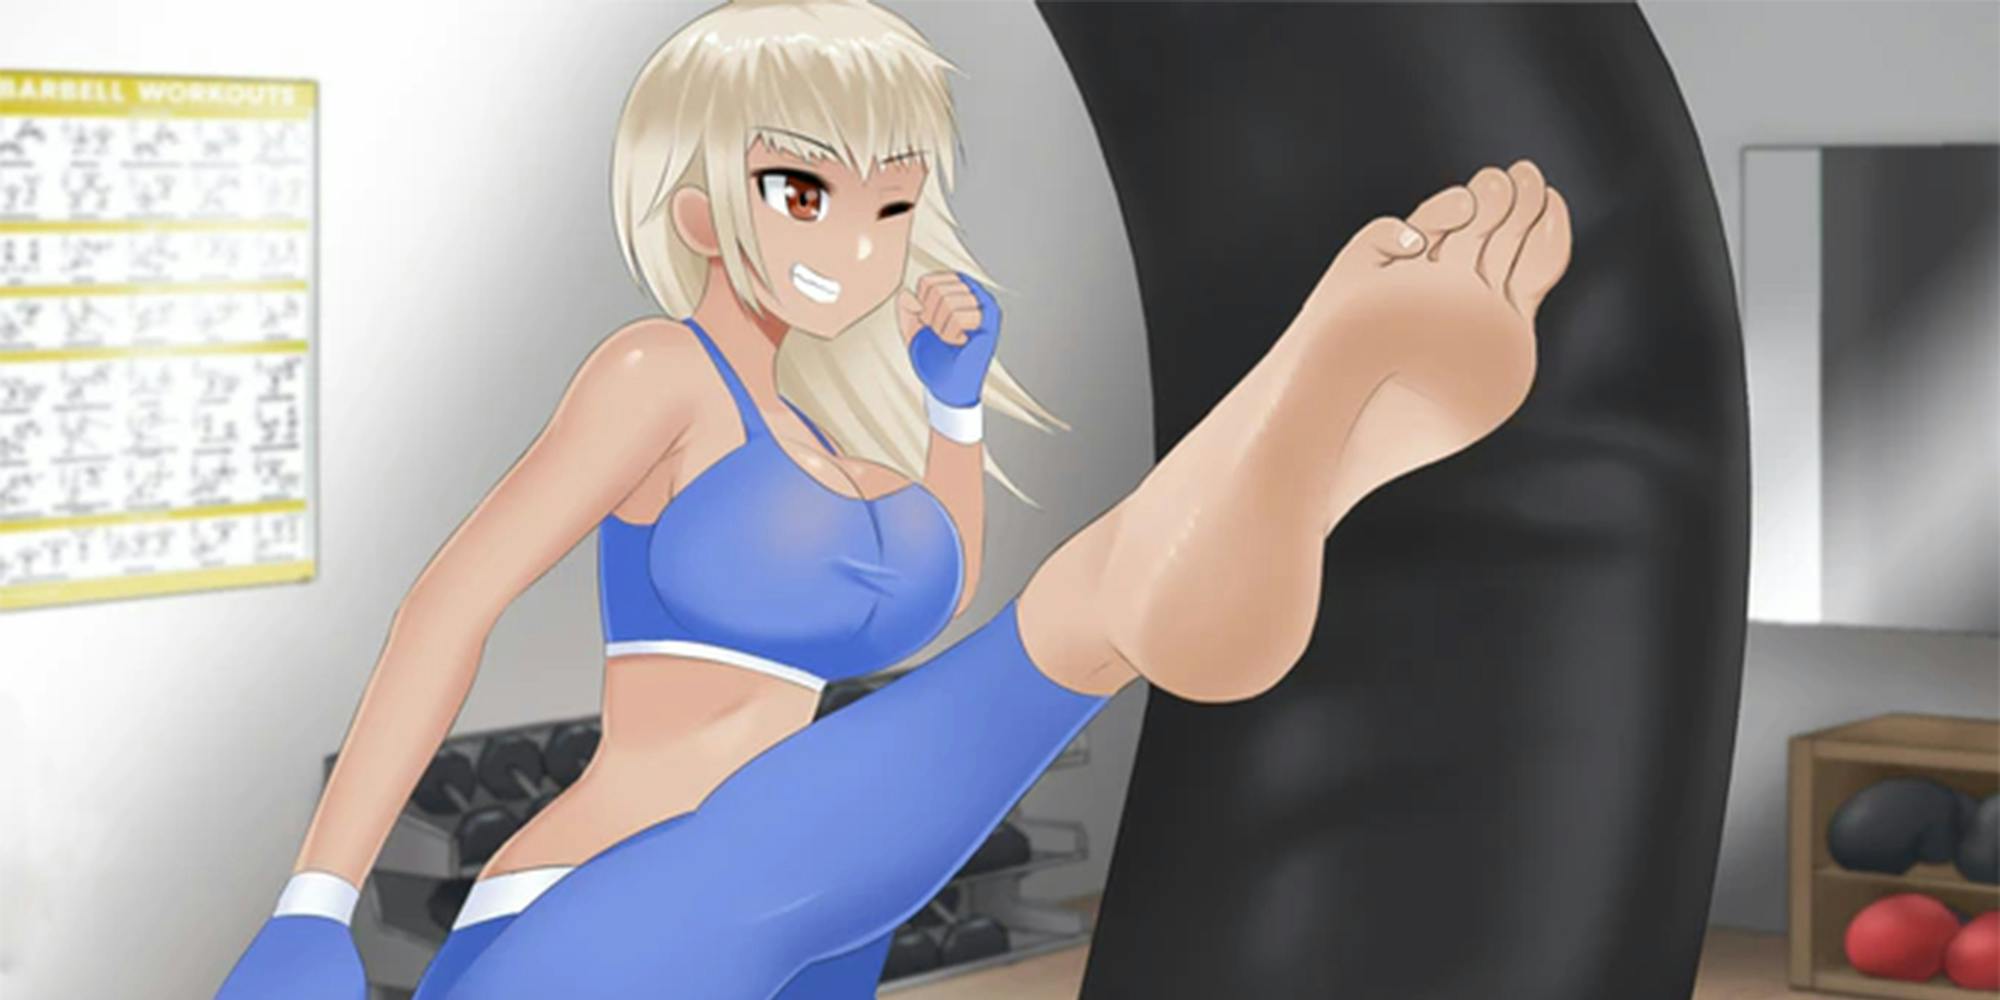 My Toes Story: Kickstarter Offers Foot Fetish Visual Novel